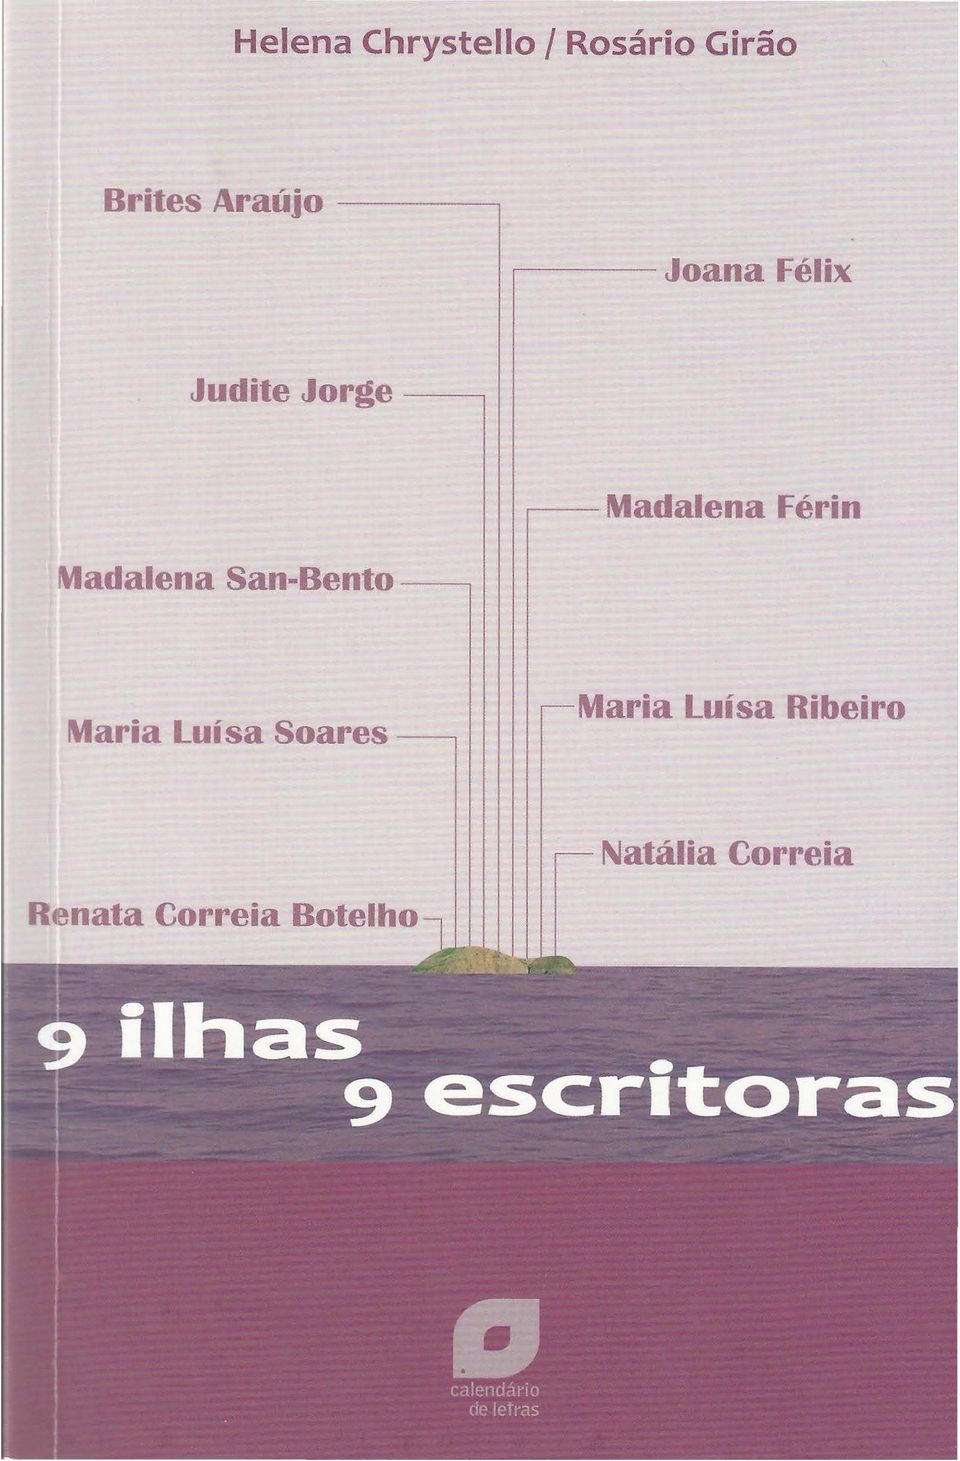 San-Bento Madalena Férin Maria Luísa Soares Maria